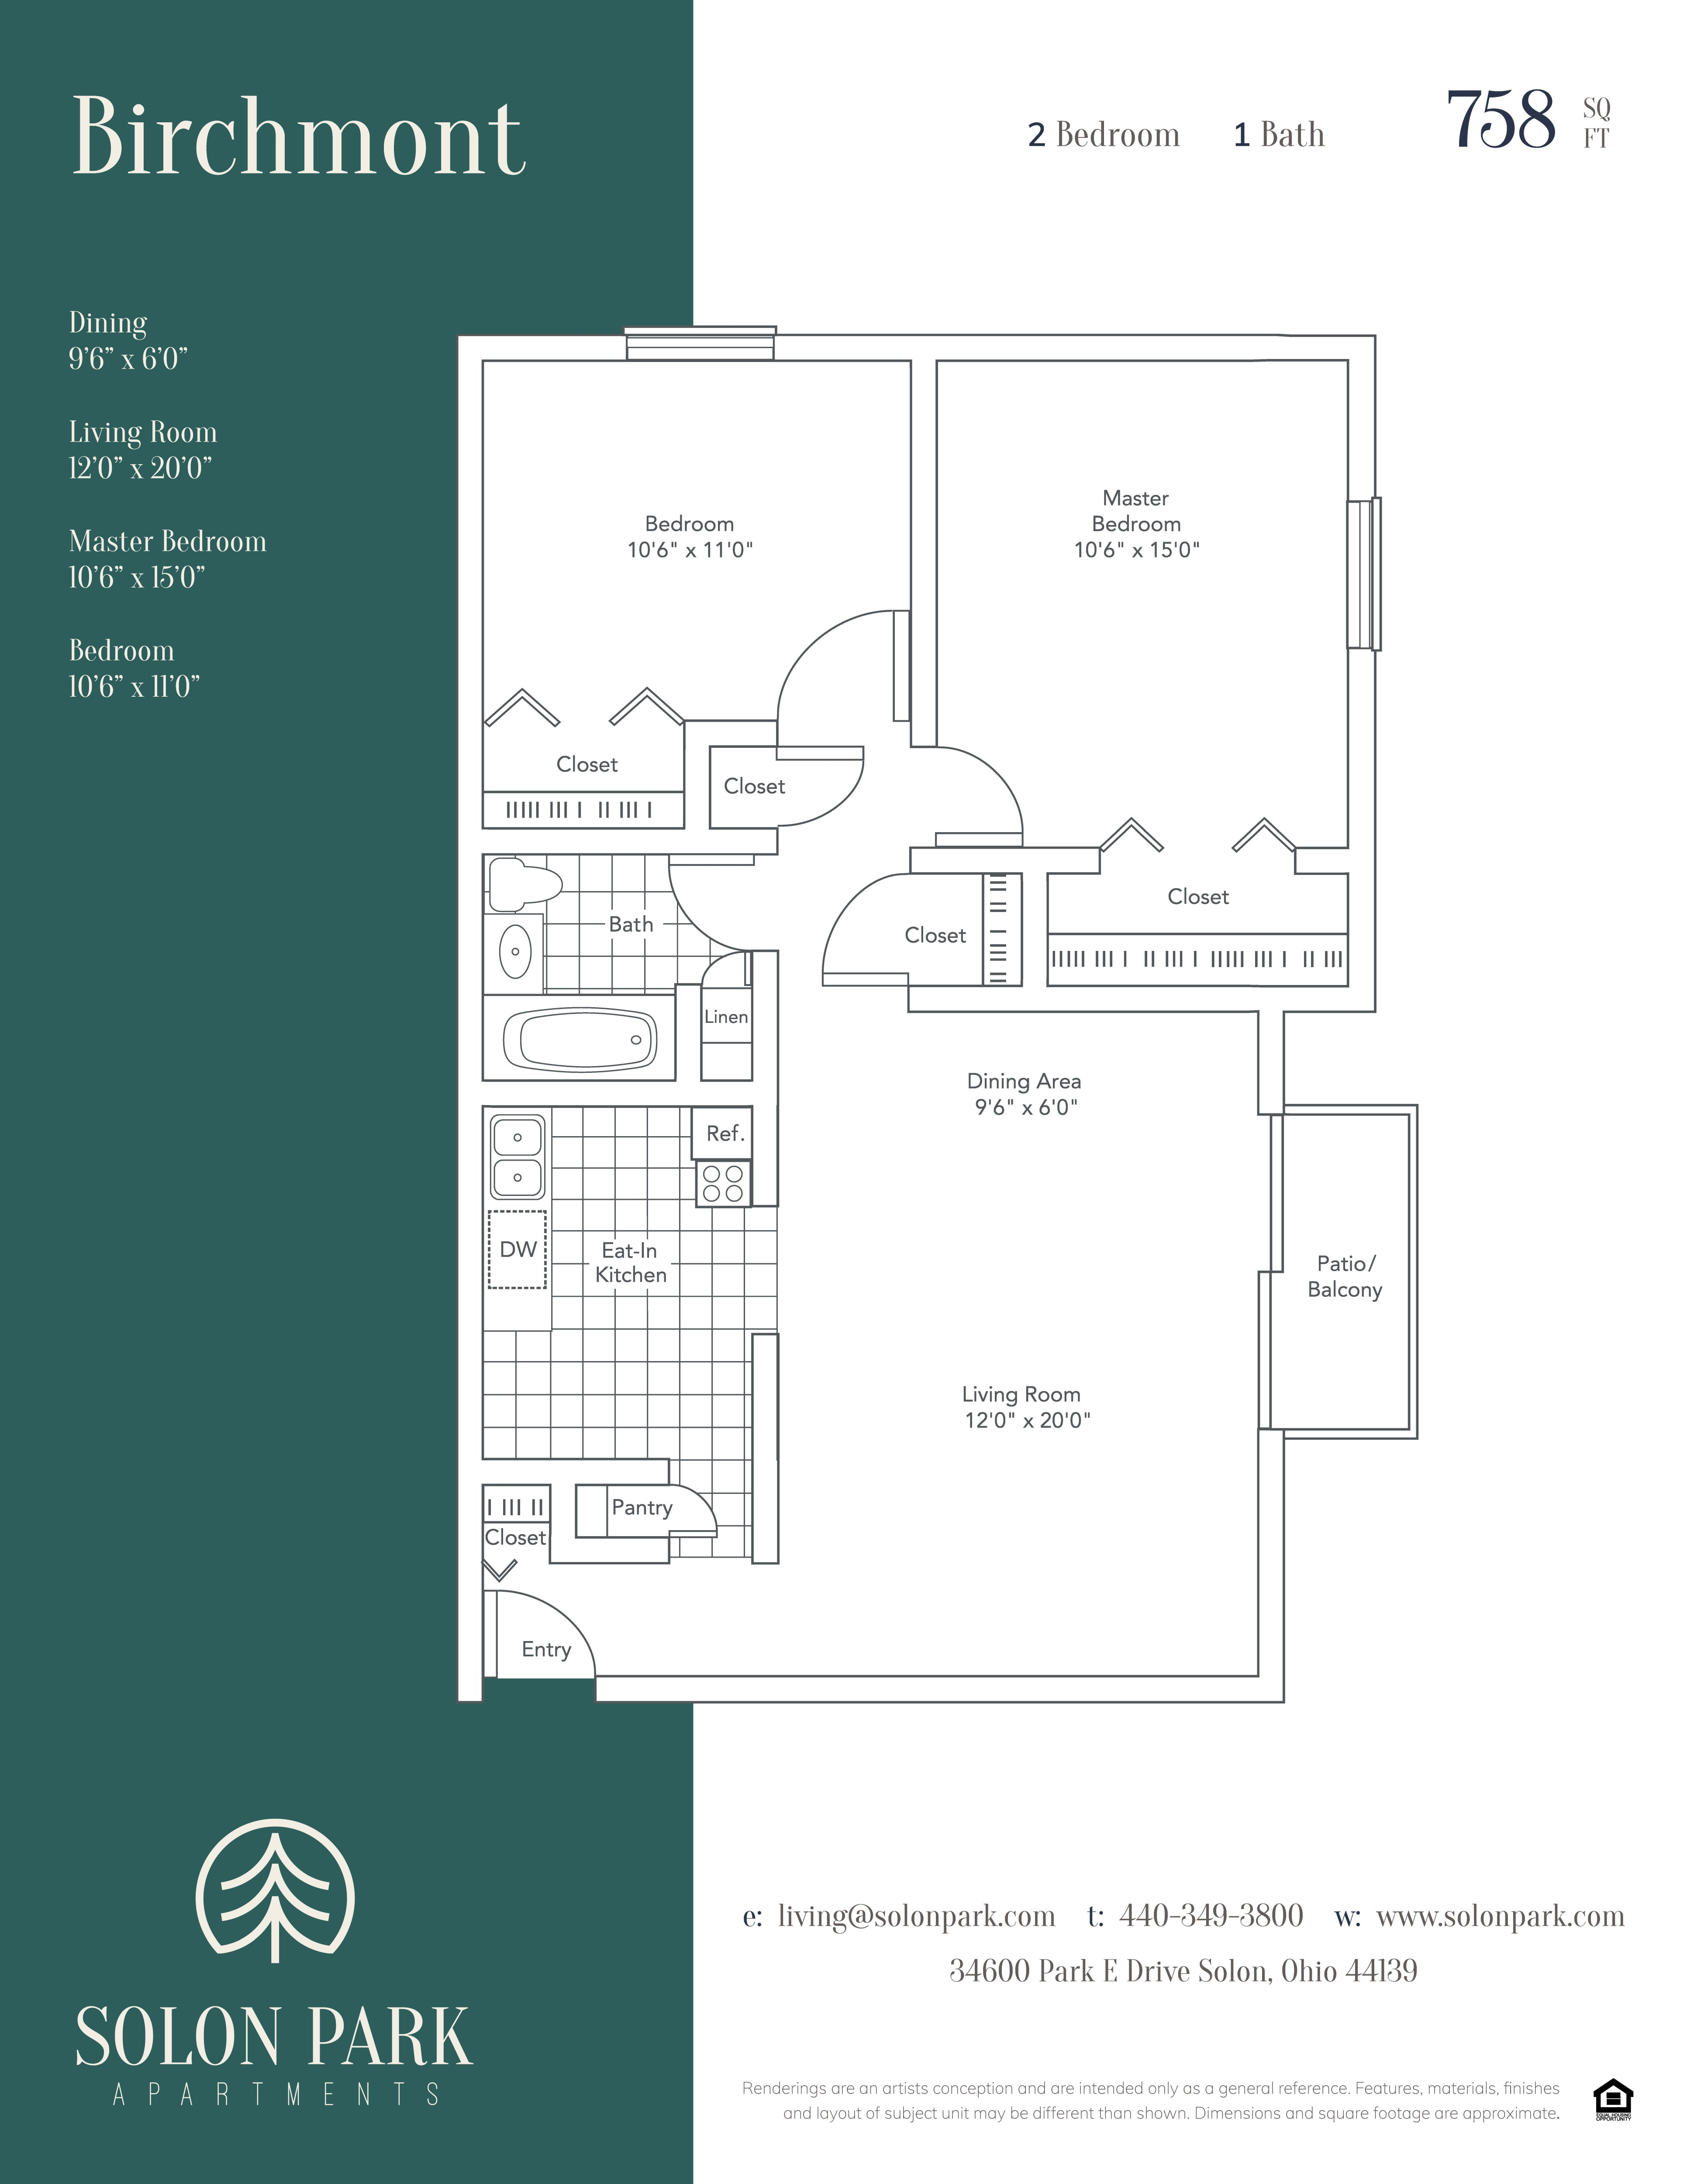 Solon Park Floorplan Sheet Birchmont.jpg